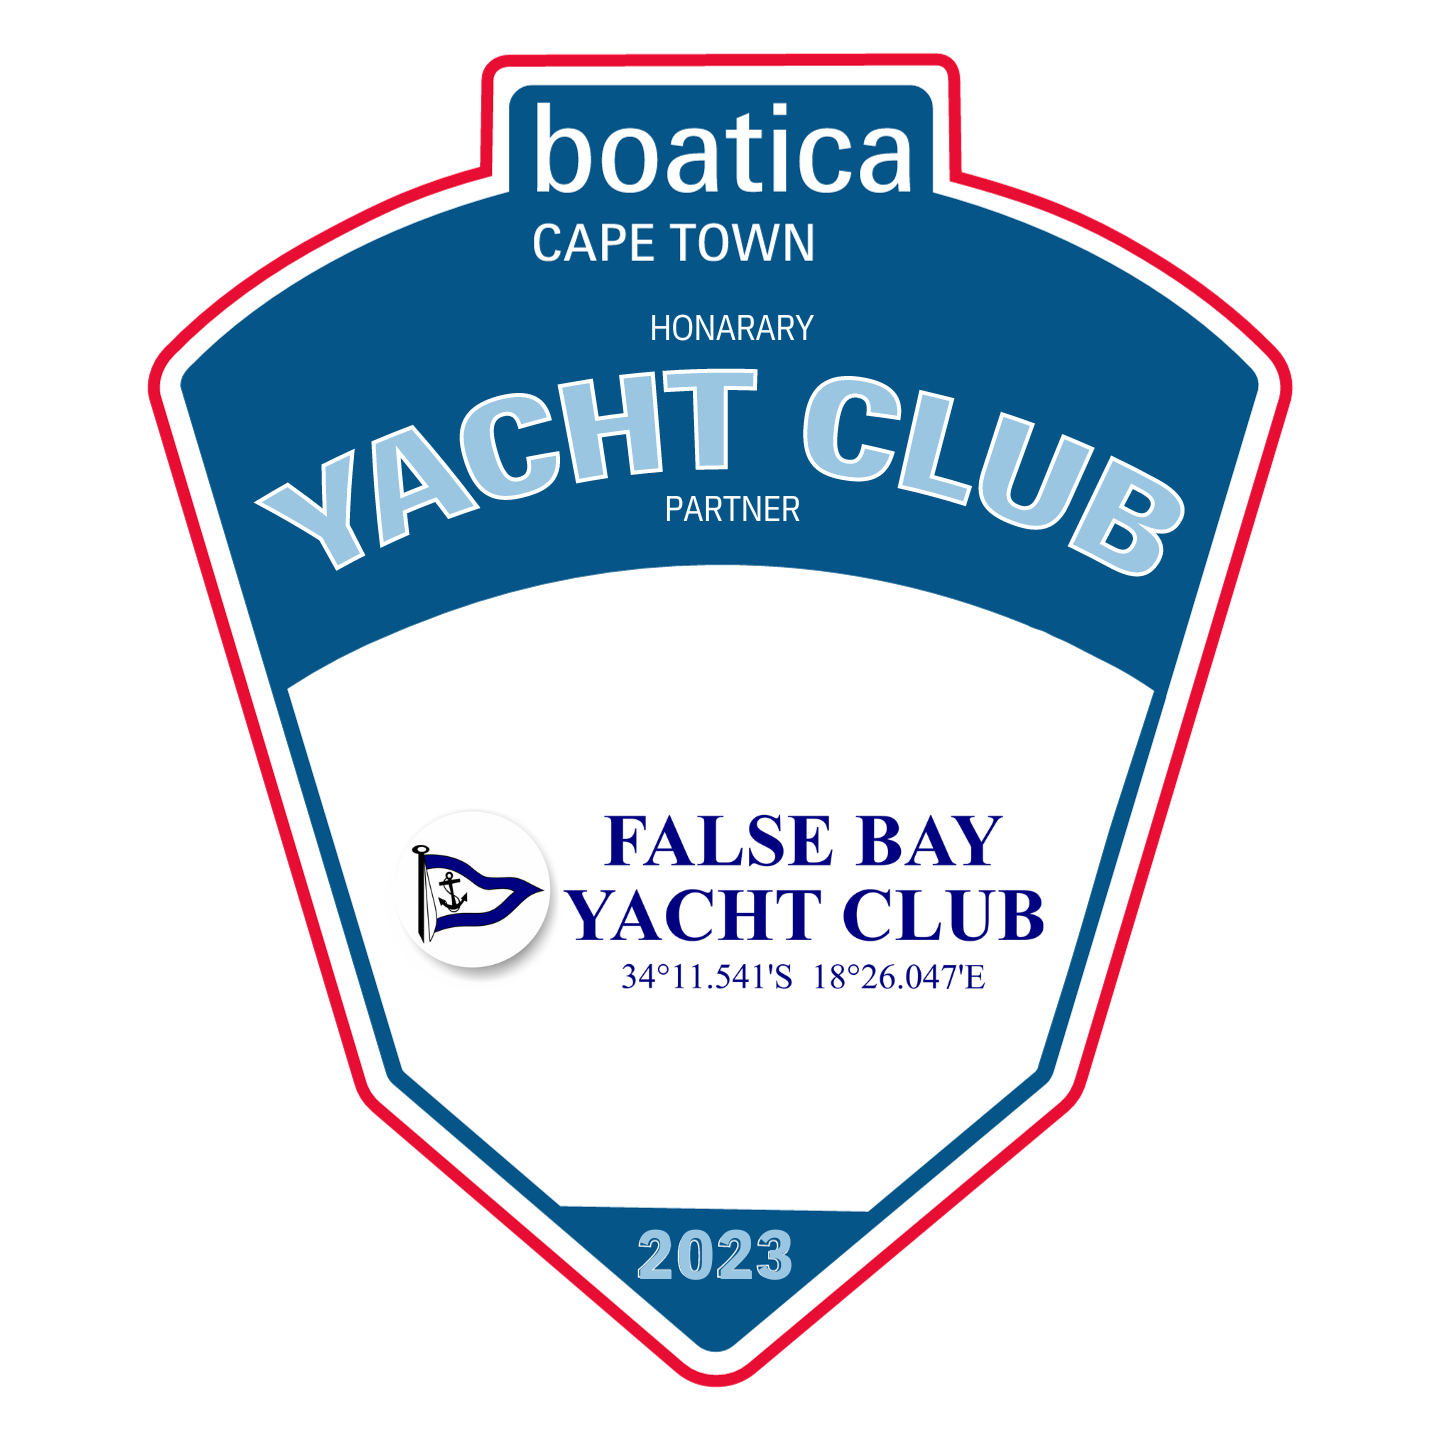 False Bay boatica honorary yacht club partner logo.pdf - 4